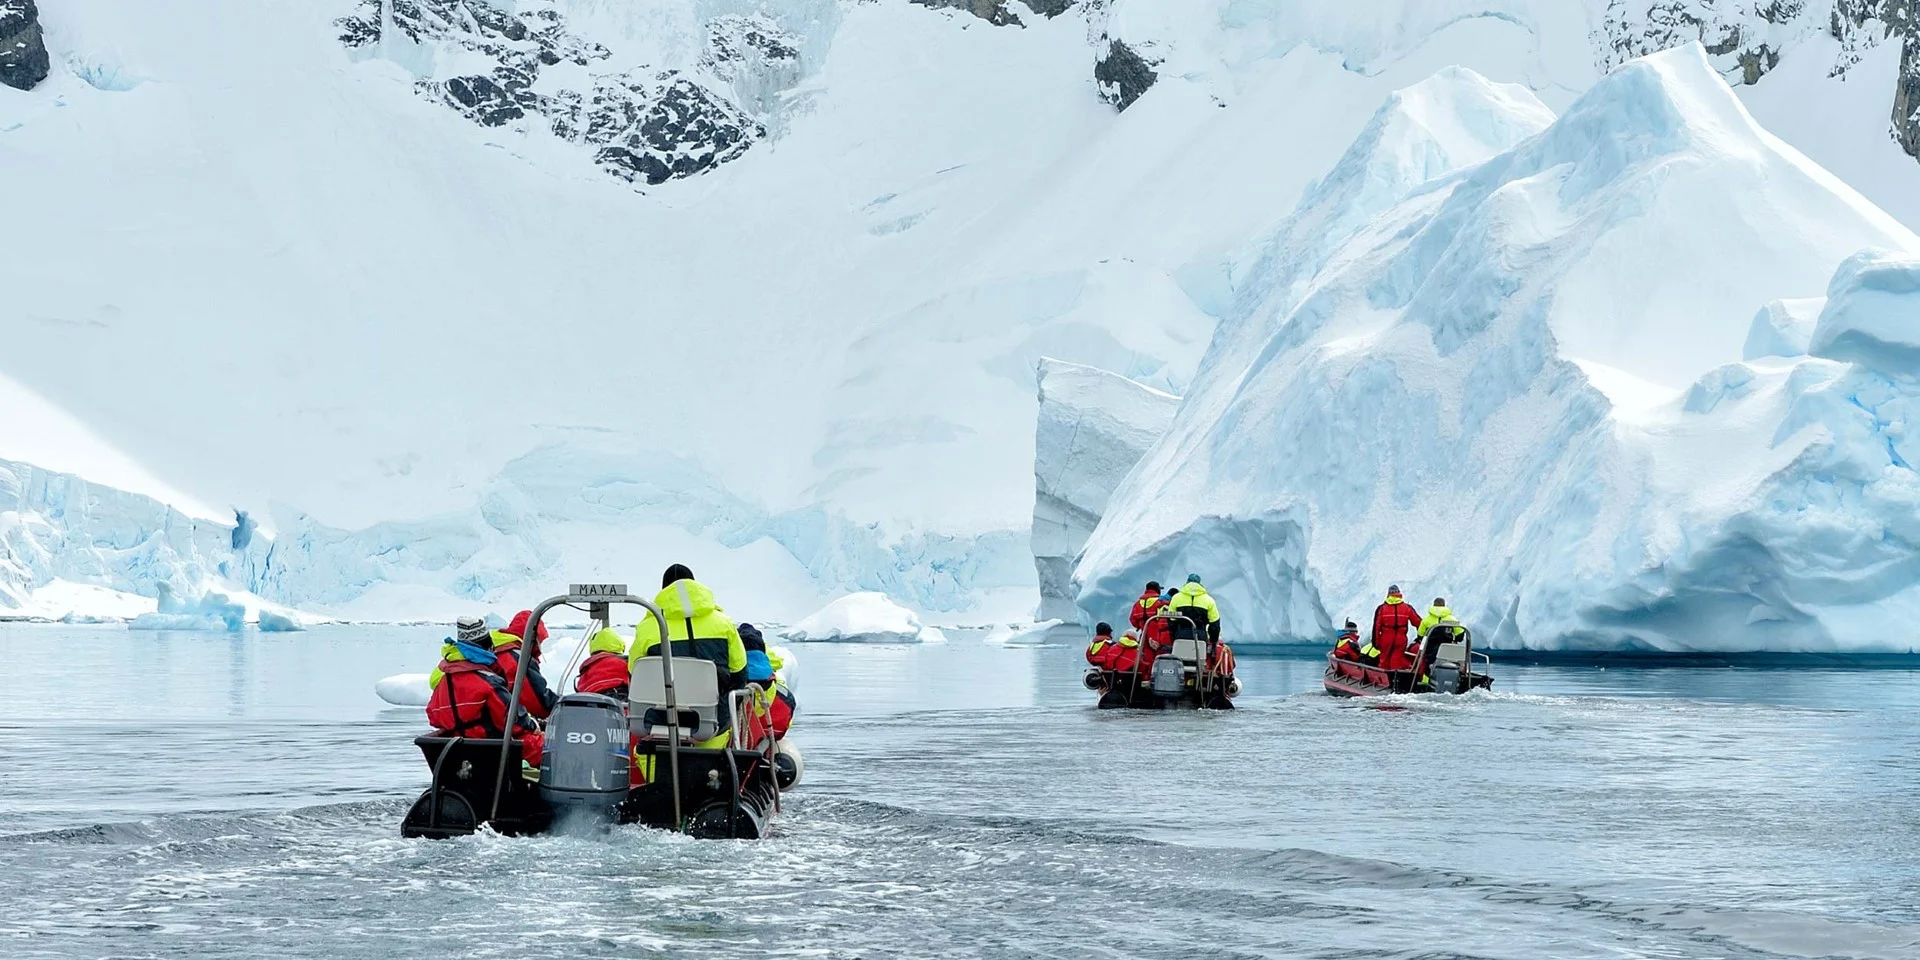 Warum Hurtigruten Expeditions?